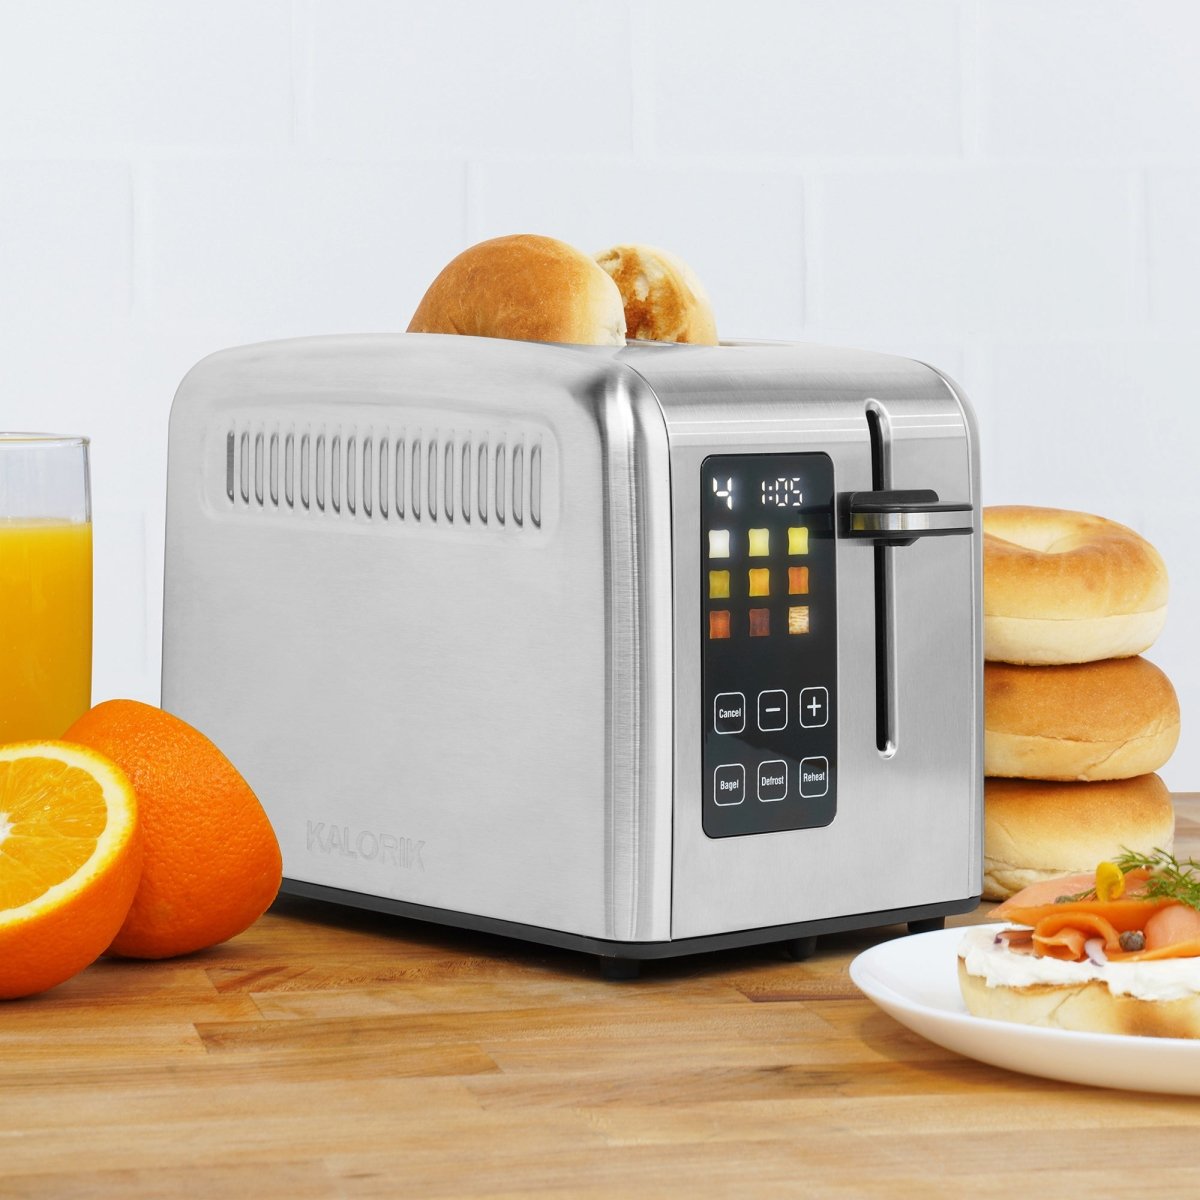 Kalorik® 2-Slice Rapid Toaster with LCD Display, Stainless Steel